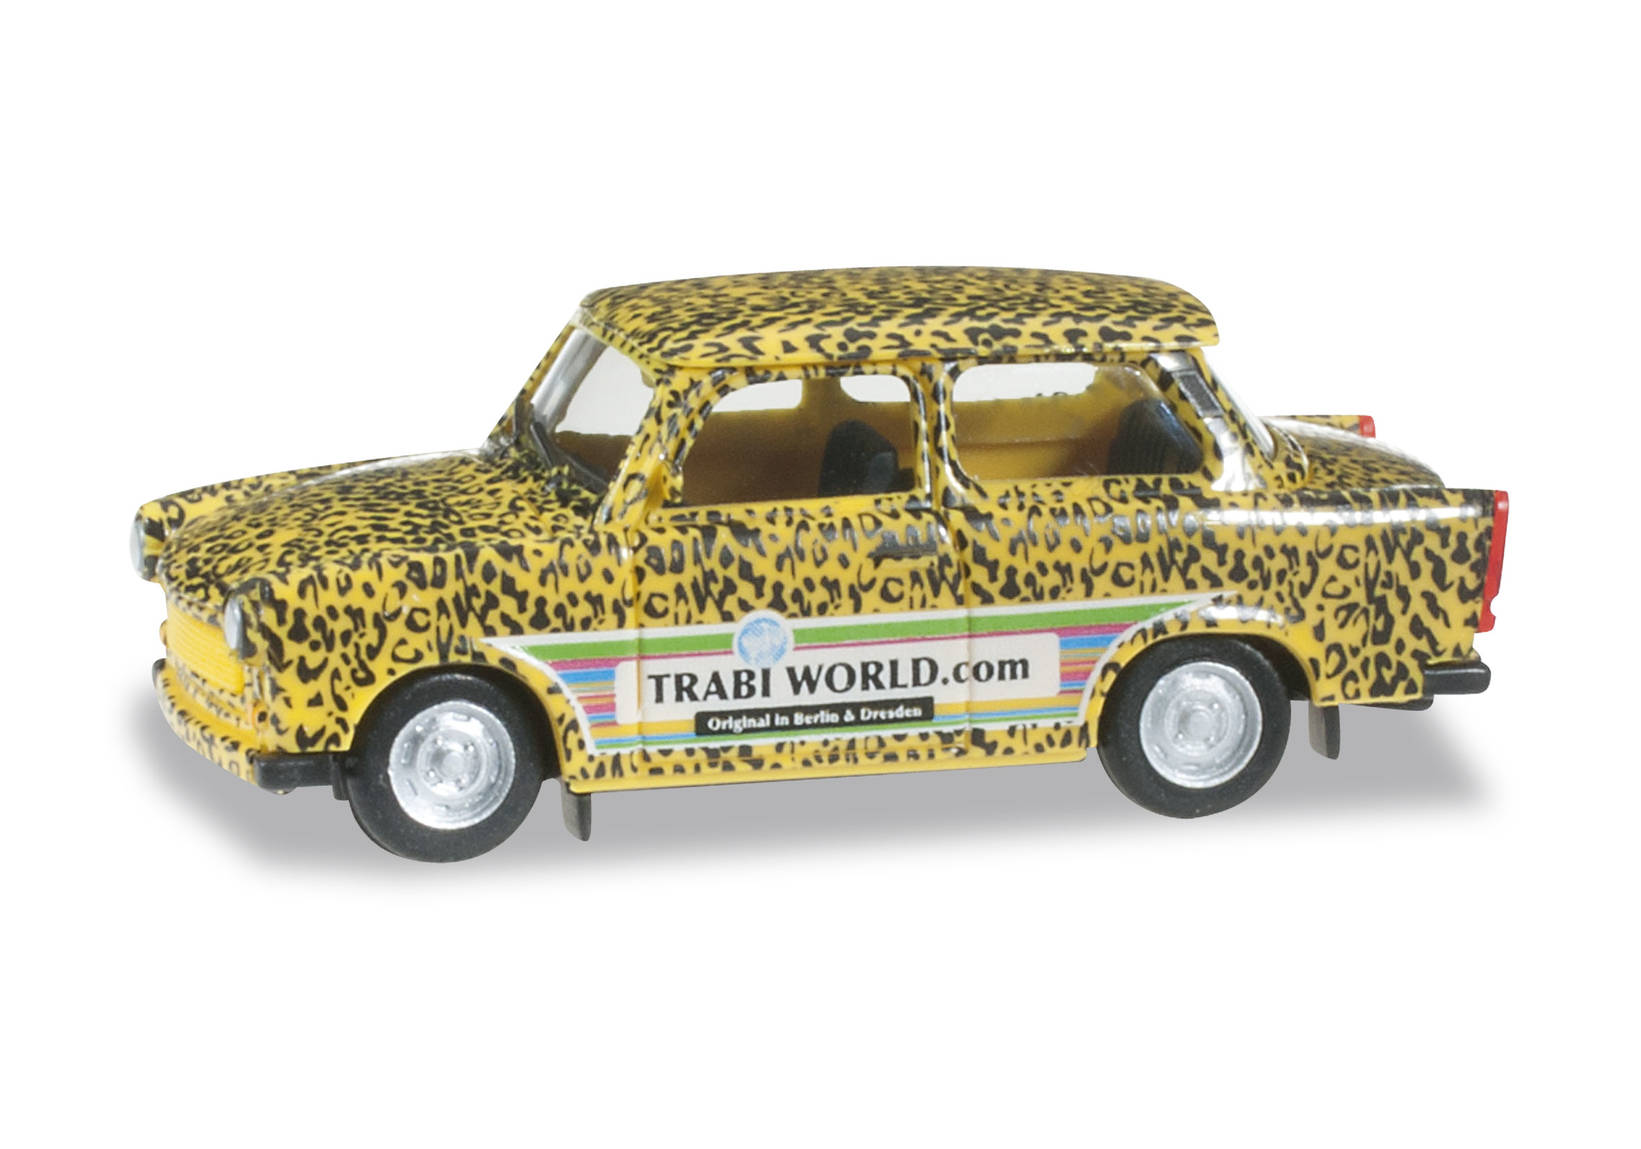 Trabant 601 "Edition Trabi-world.com" Modell 2 (Leopard)